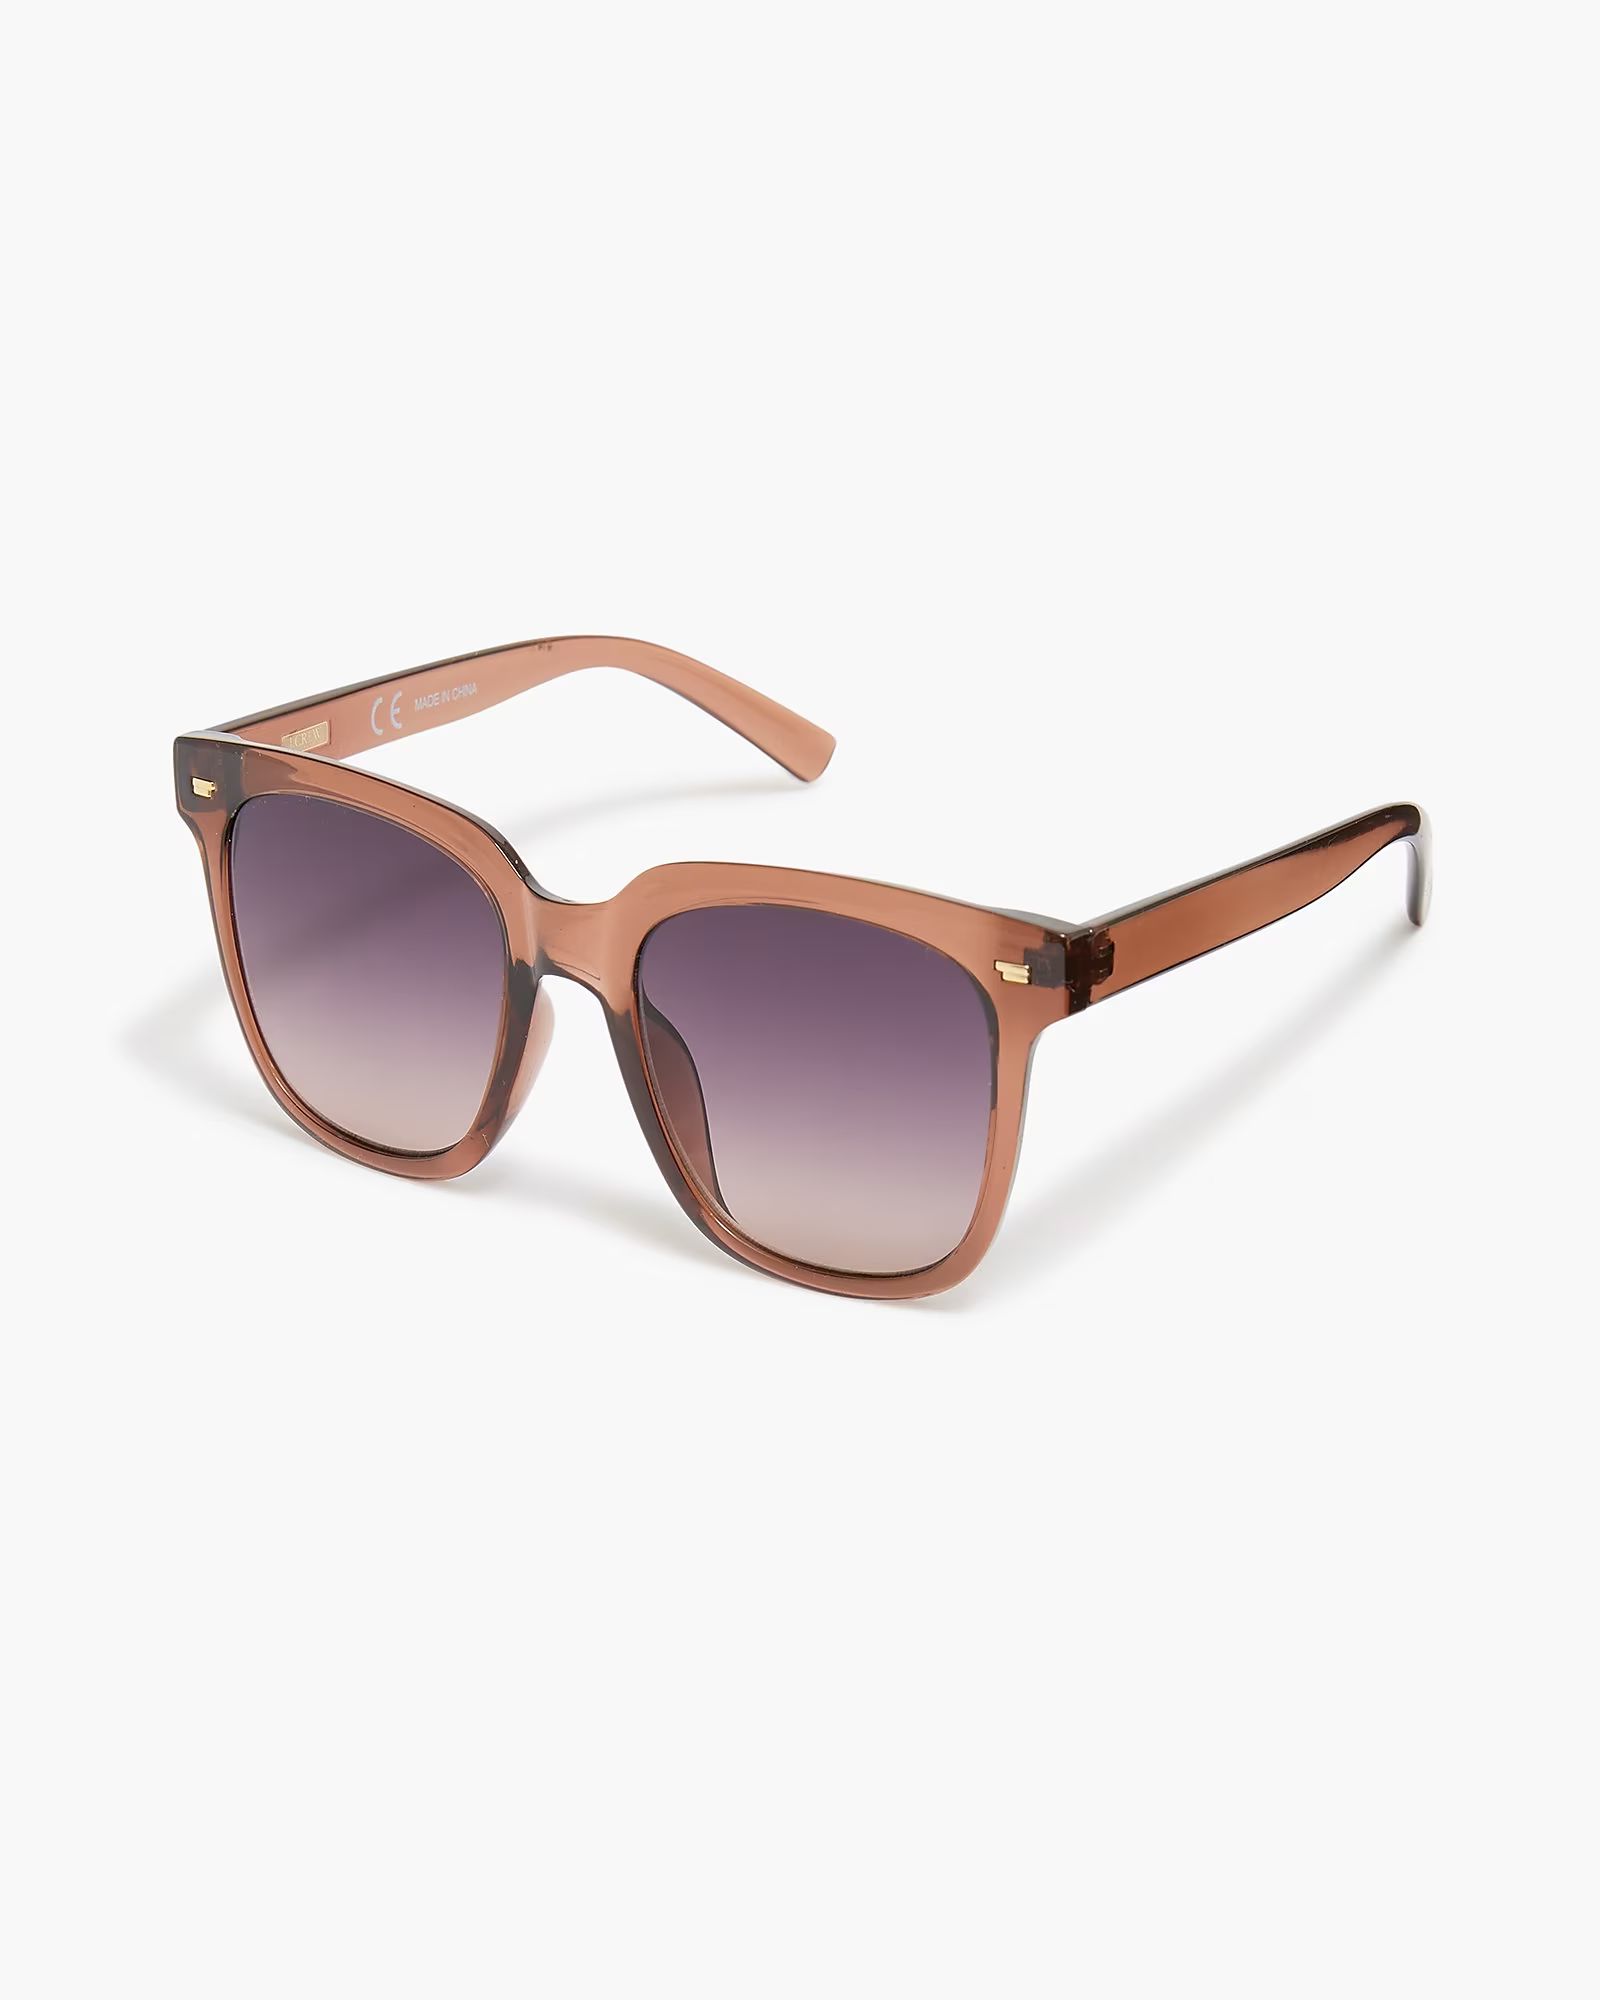 Slim D-frame sunglasses | J.Crew Factory